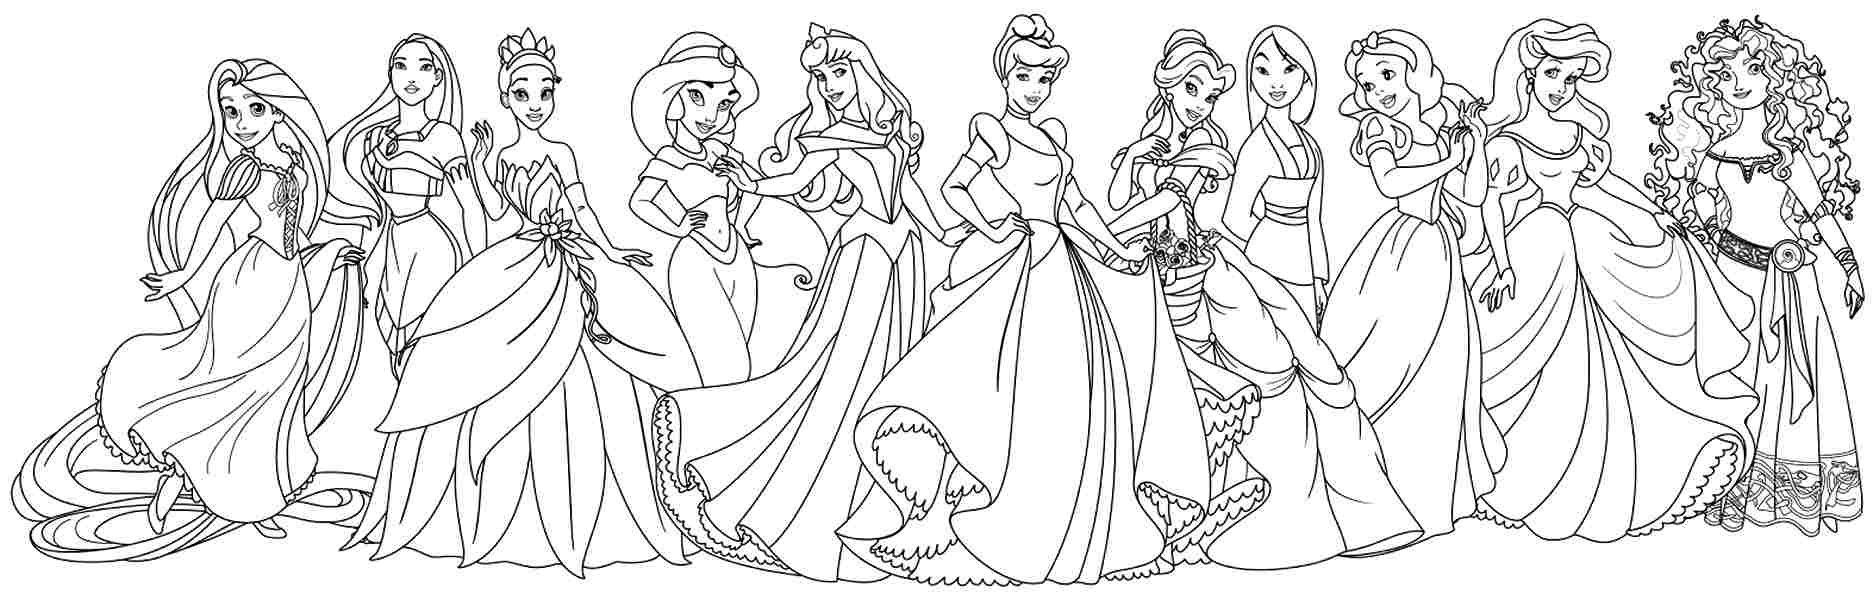 Free Disney Princess Coloring Pages Image 42 - VoteForVerde.com